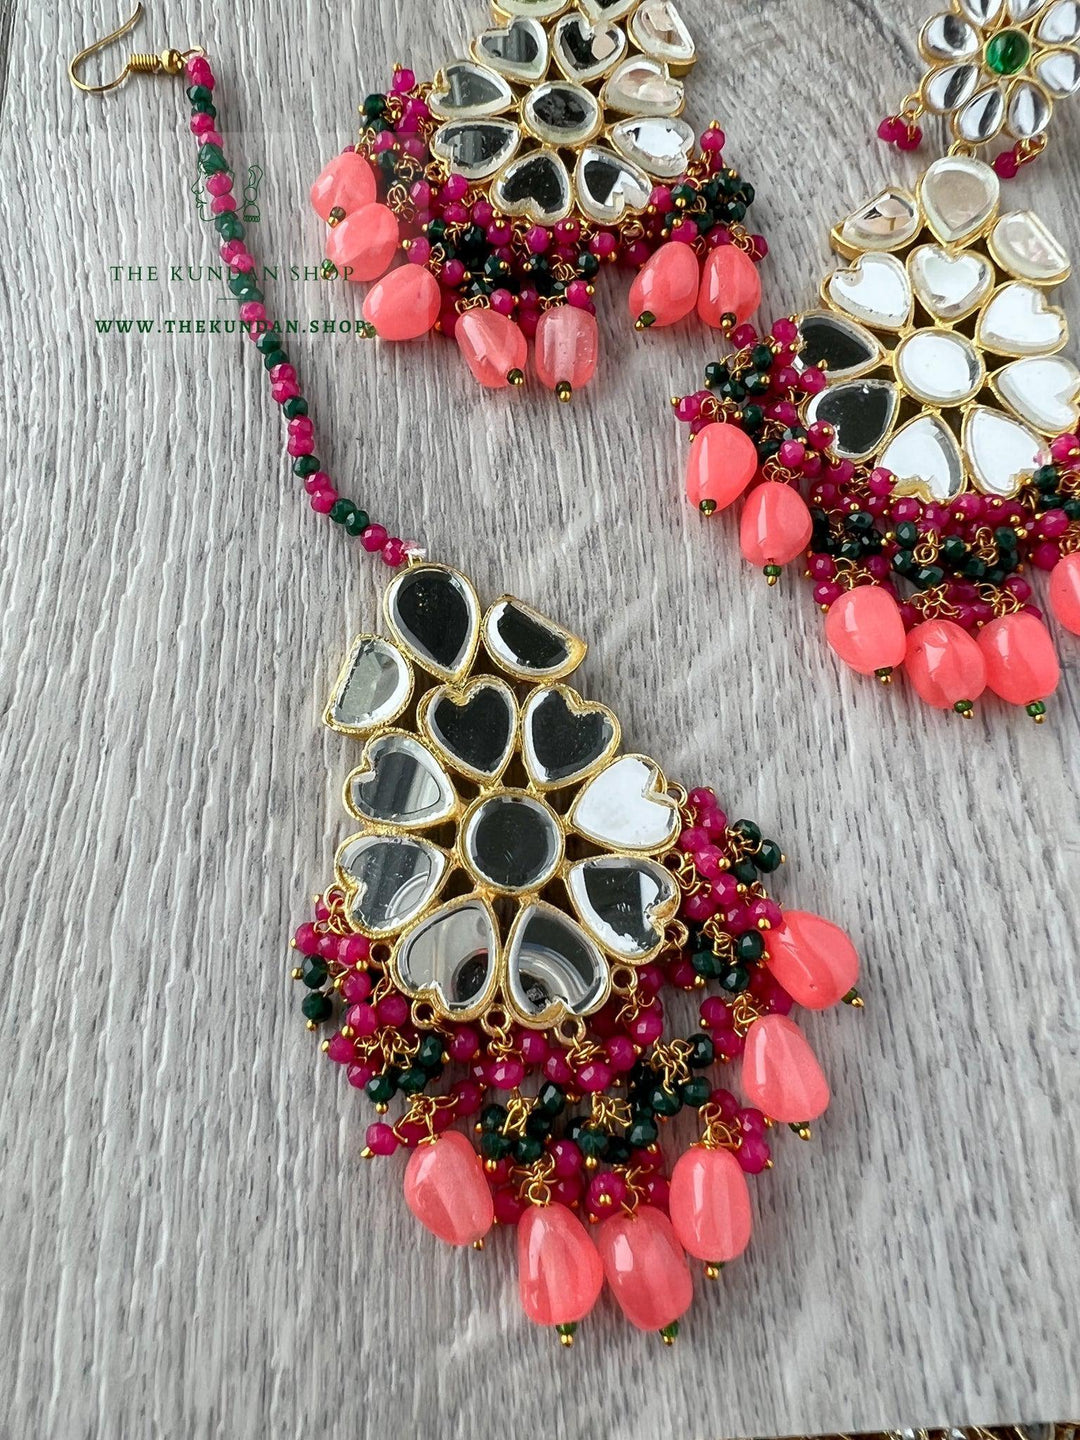 Floral Mirrors in Coral Pink Earrings + Tikka THE KUNDAN SHOP 